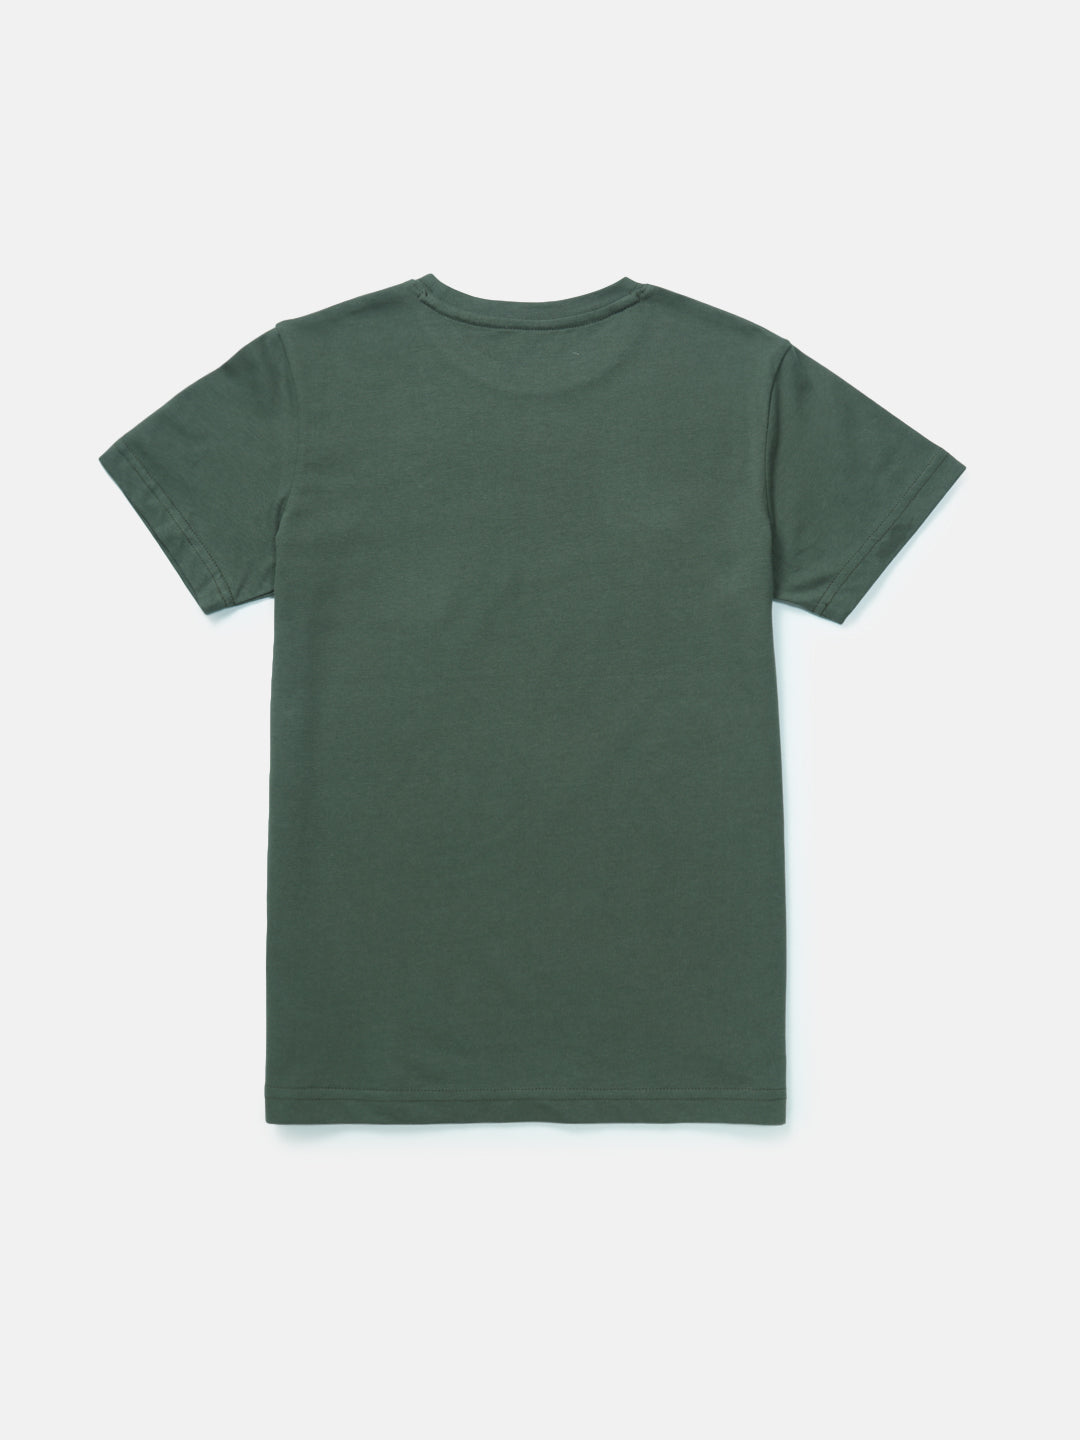 Boys Green Solid Knits T-Shirt